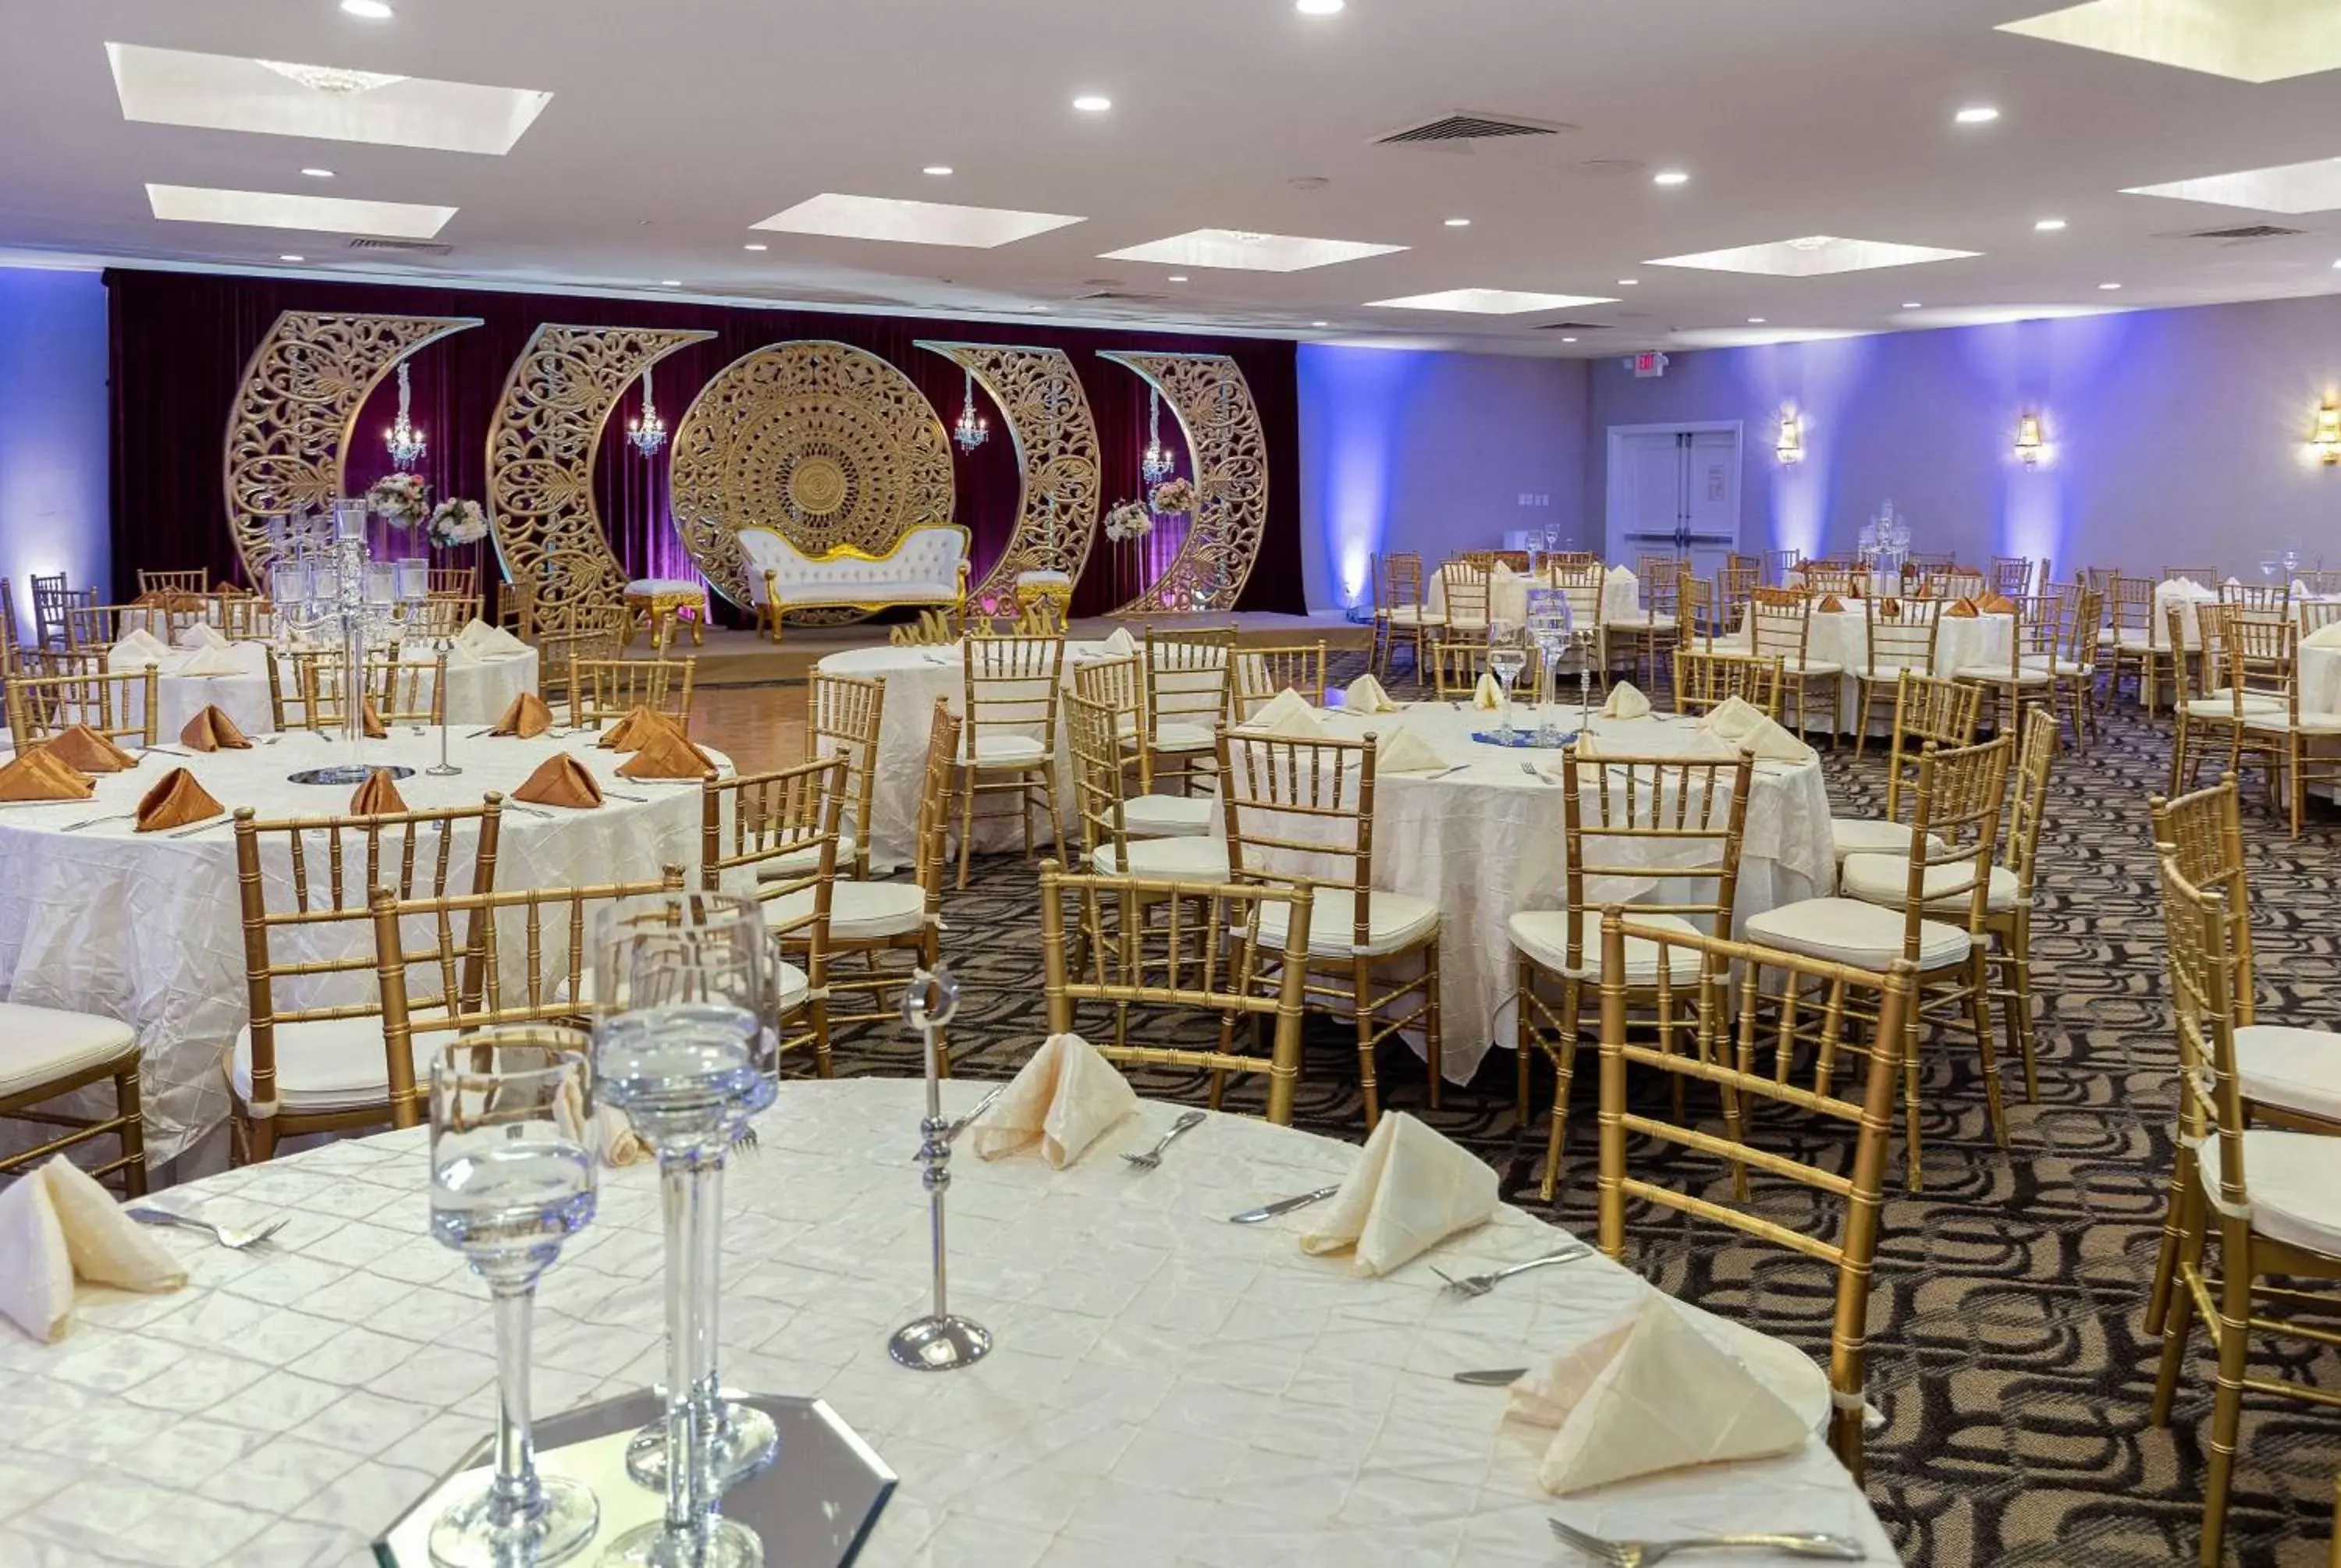 Banquet/Function facilities, Restaurant/Places to Eat in Wyndham Garden Manassas